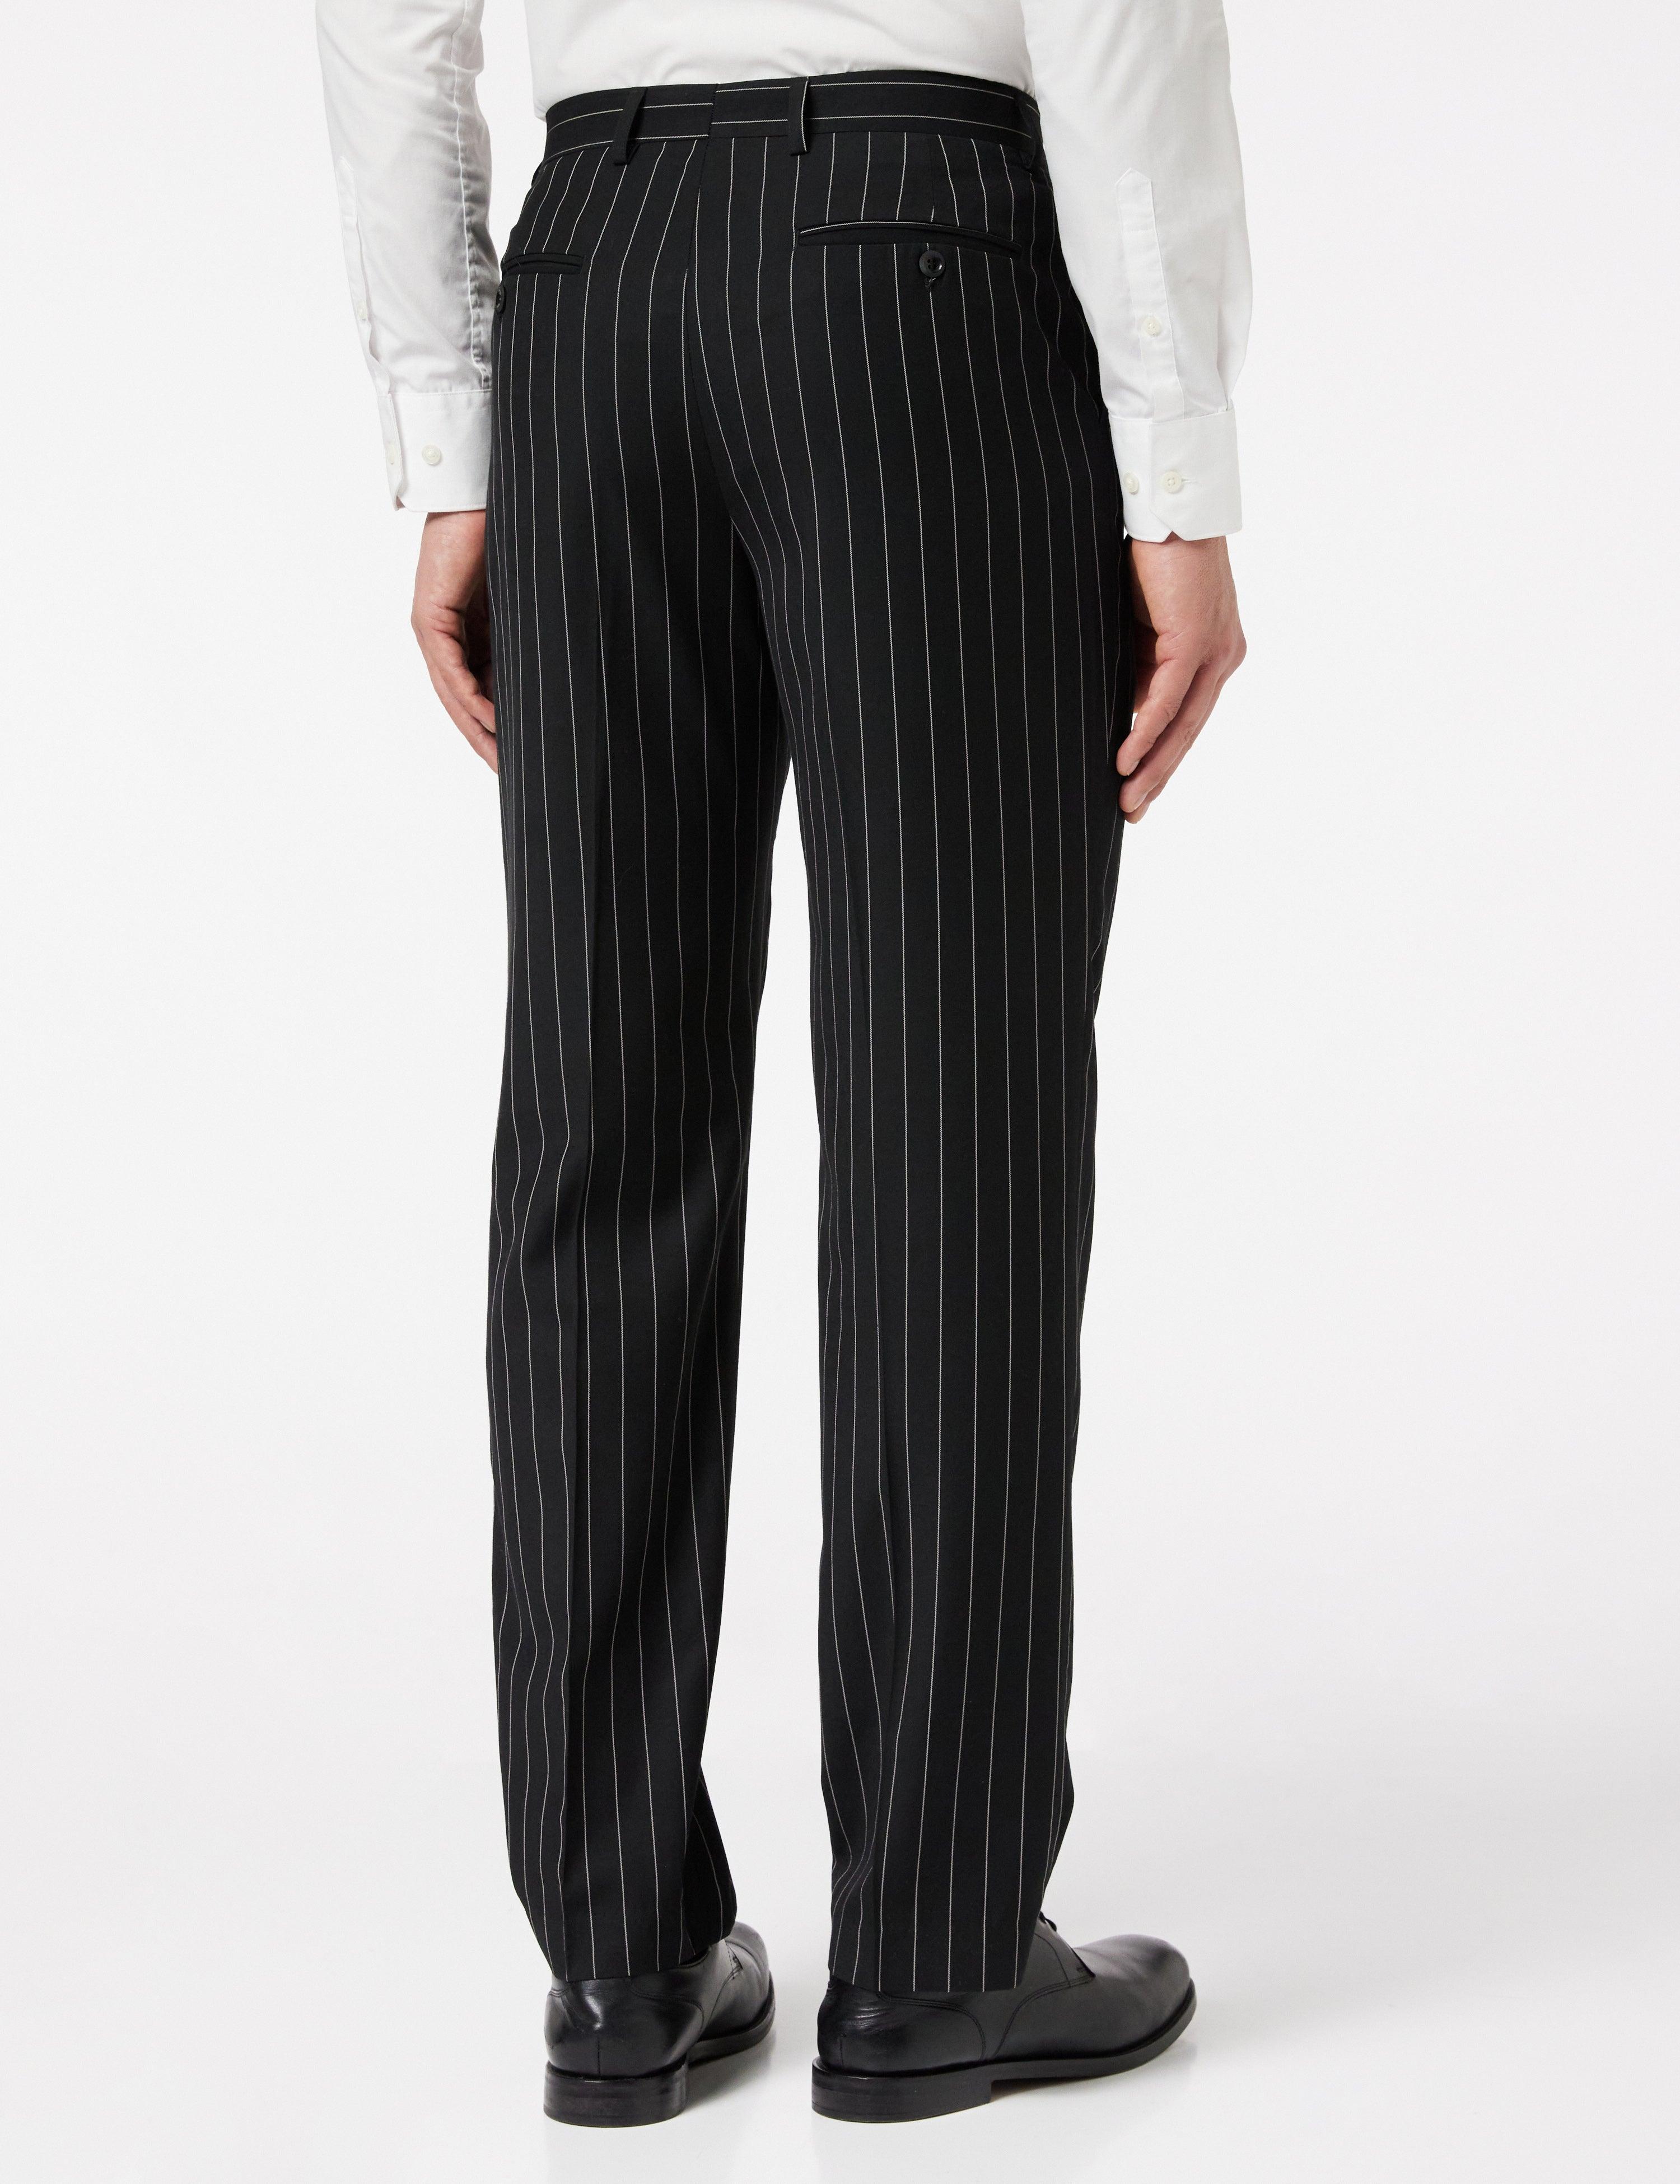 Classic Black White Pinstripe Suit